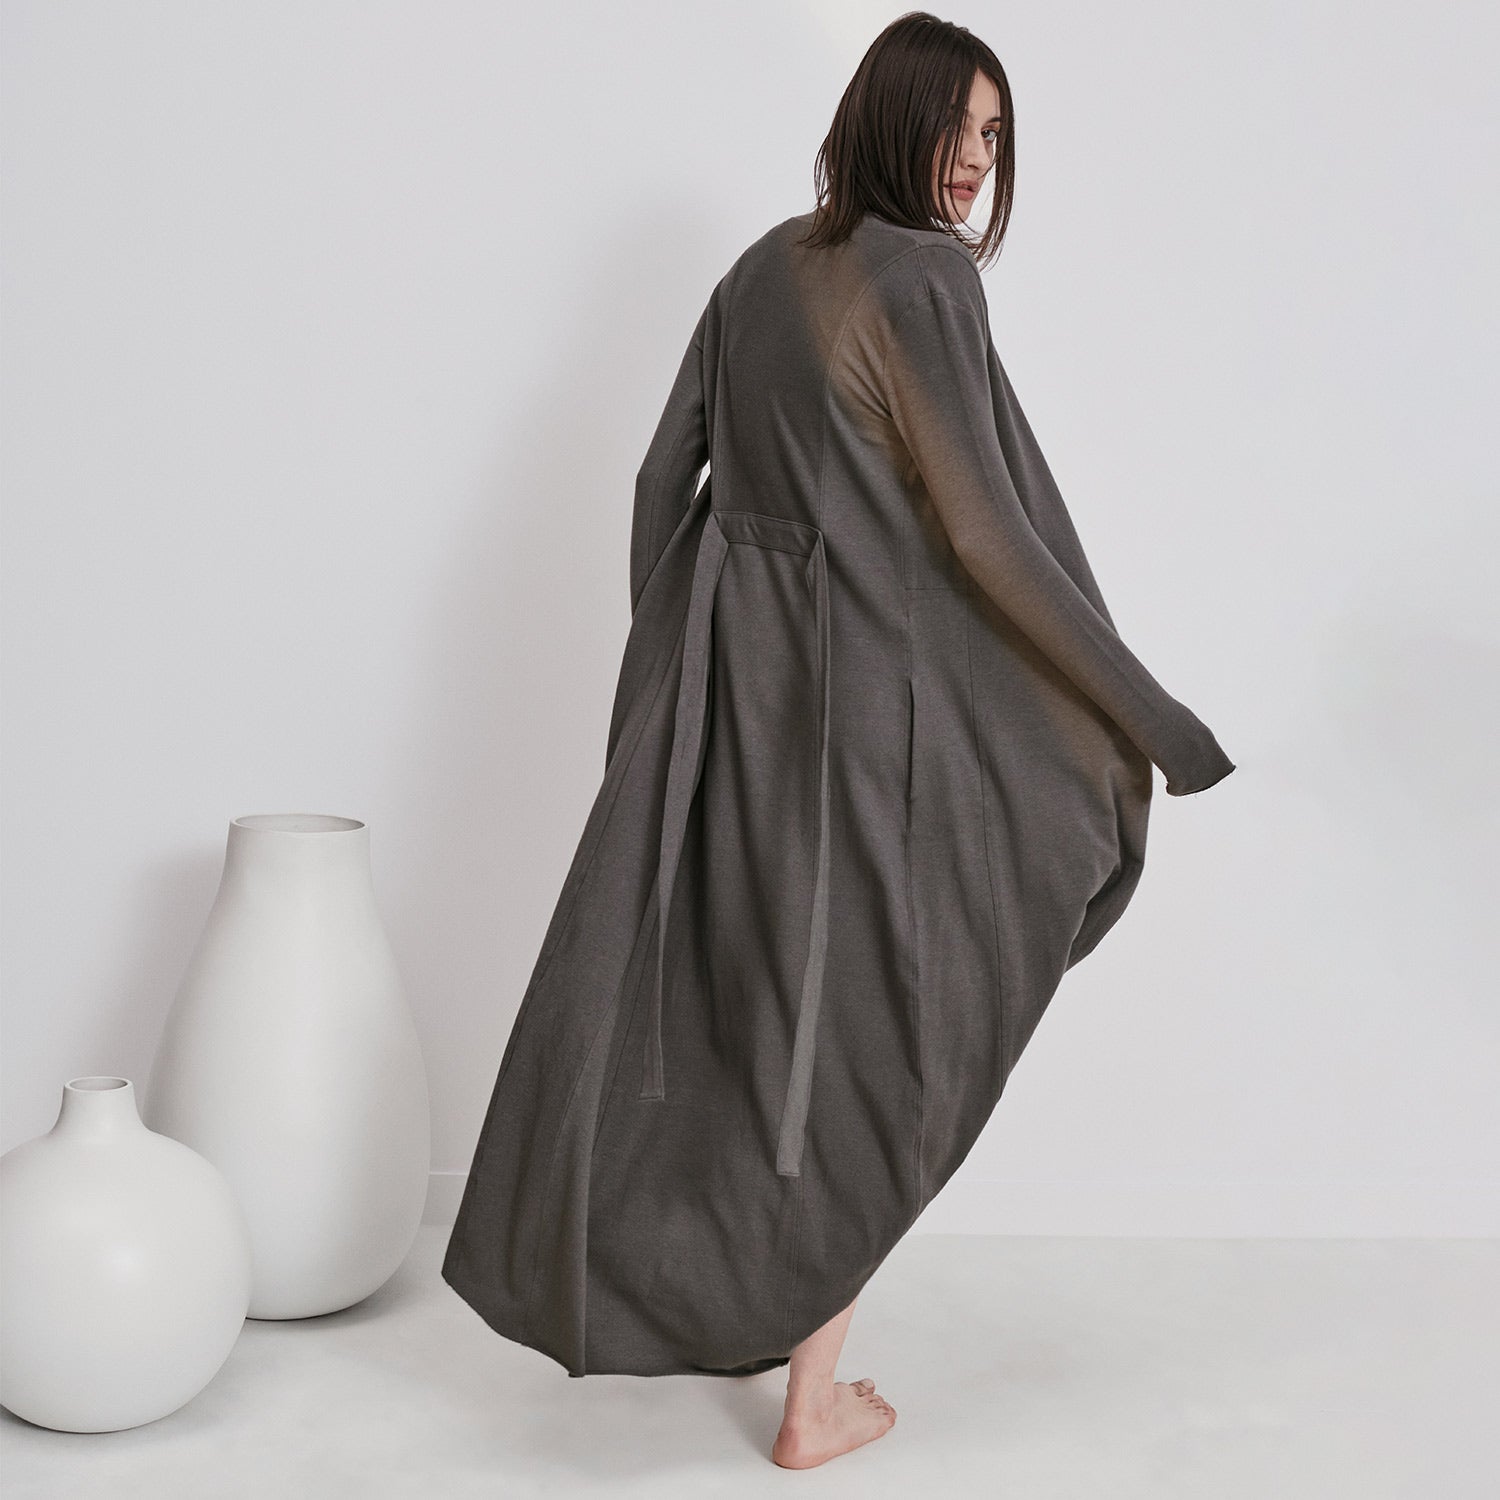 Lunya Sleepwear The Robe - #Meditative Grey